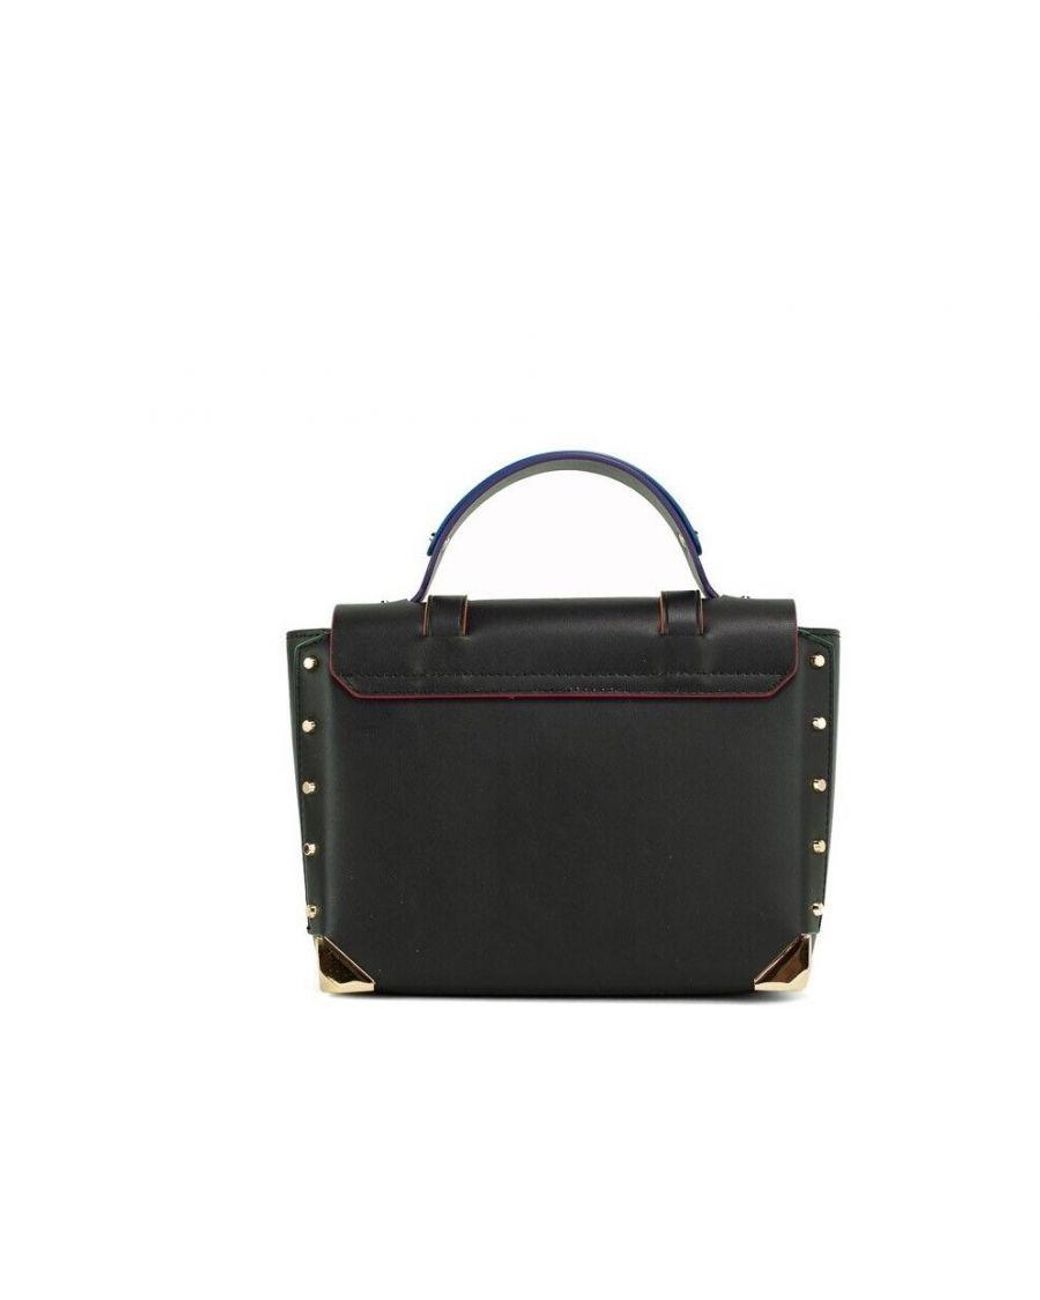 Black Bags, Handbags & Purses | COACH® Outlet